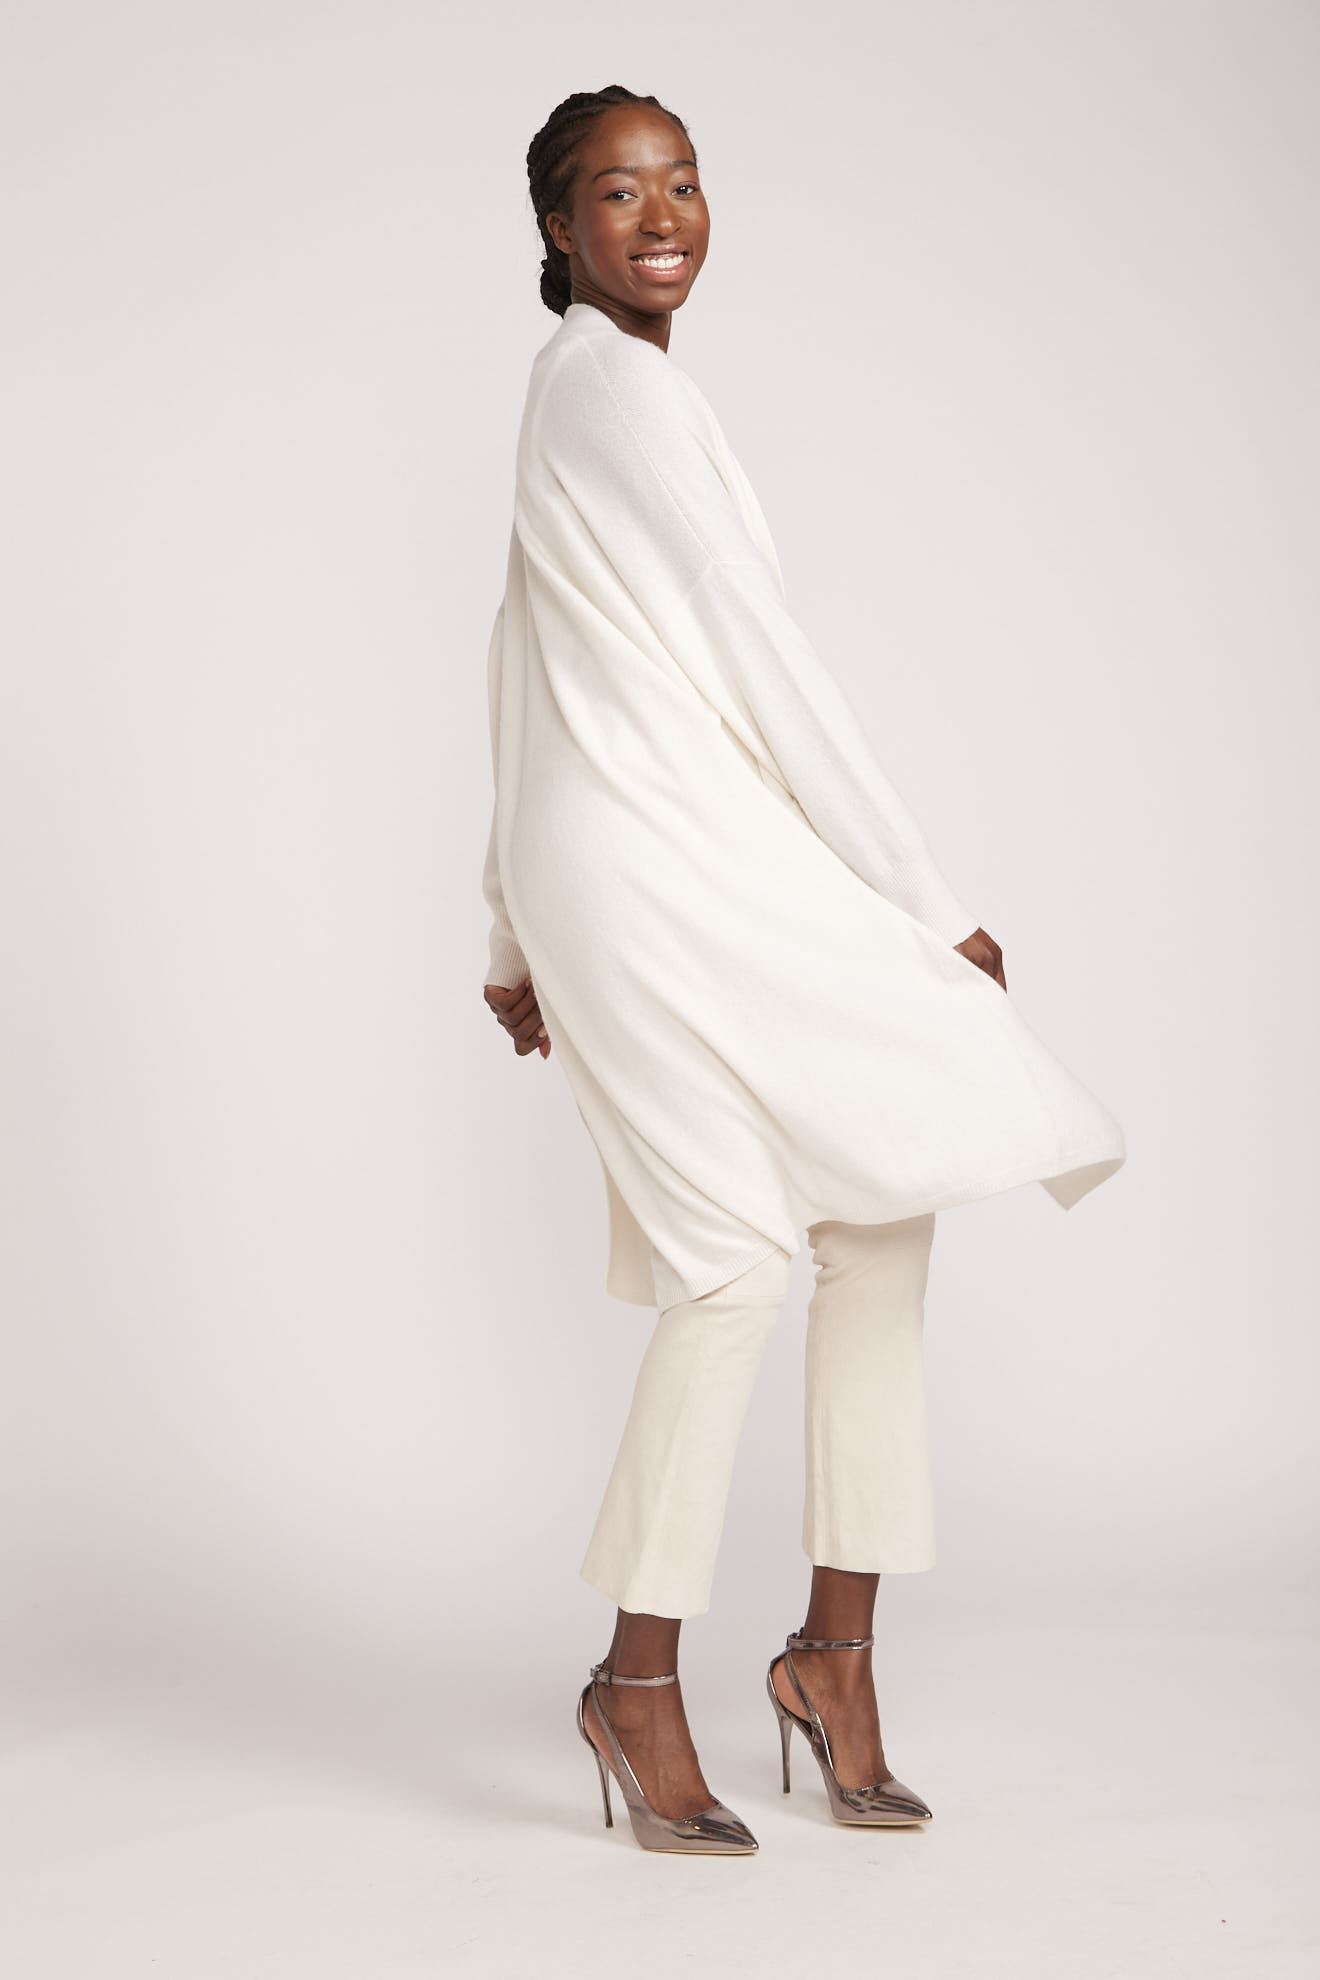 antonia zander coat white plain cashmere model side